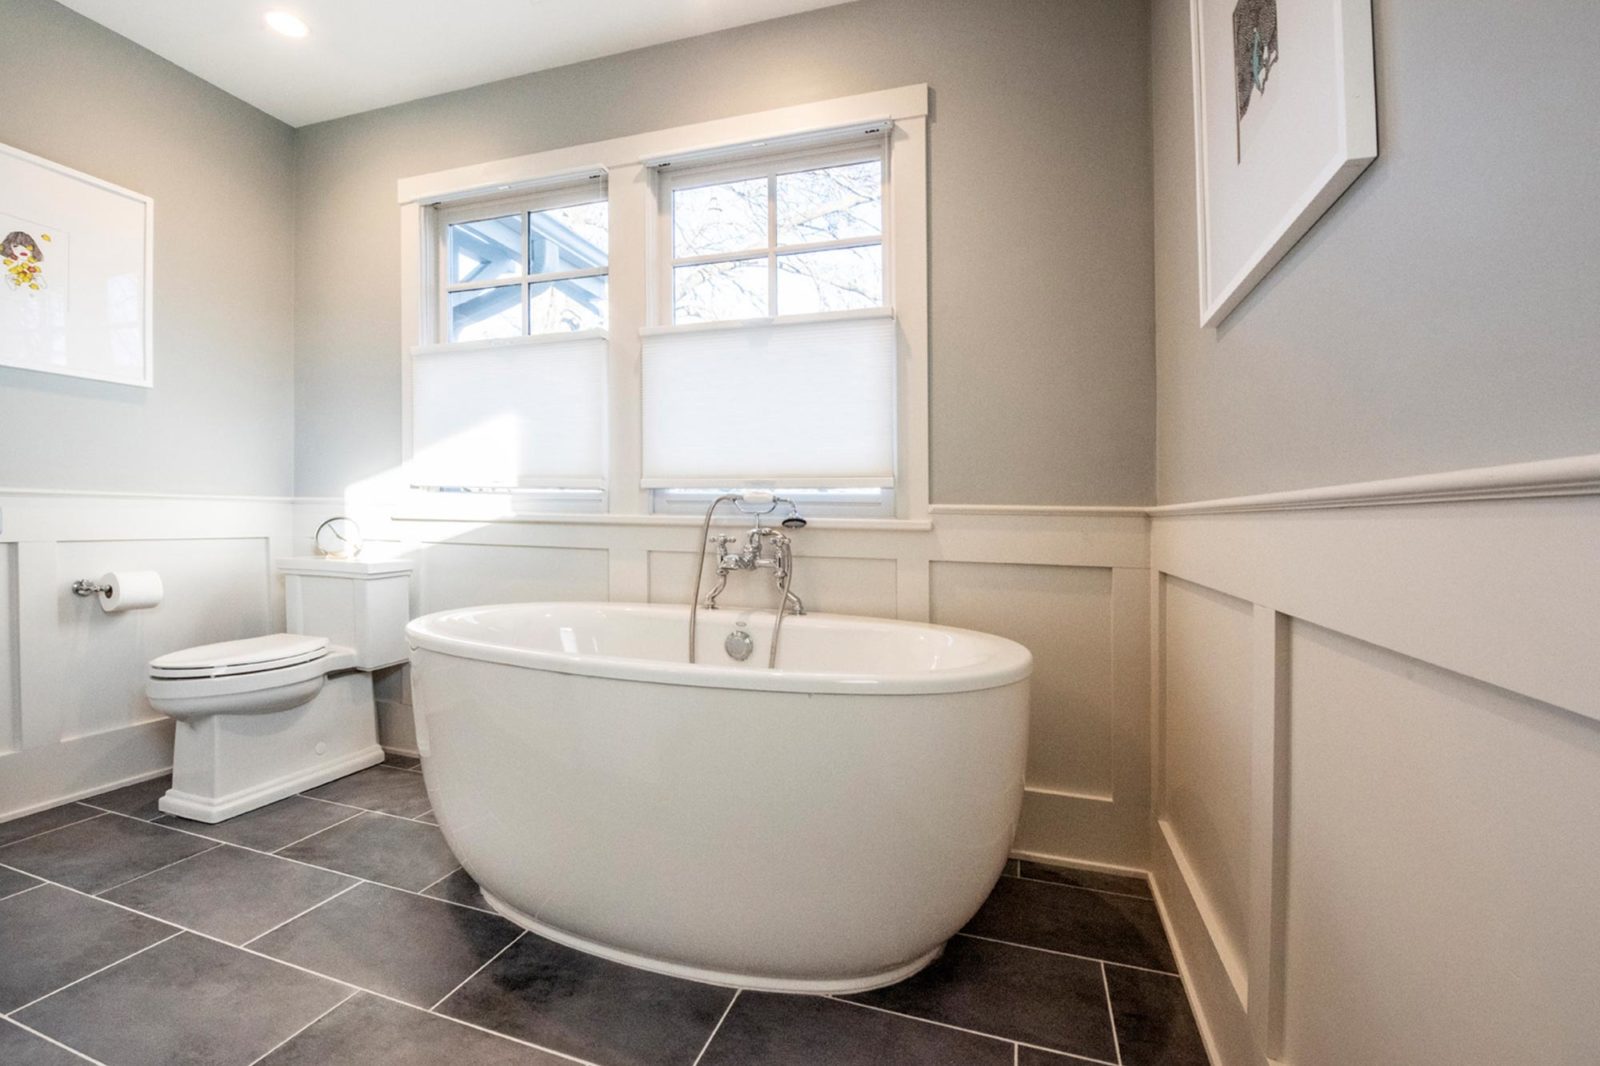 bathroom renovation stand aloone white garden tub white wainscoating grey walls grey tile floors